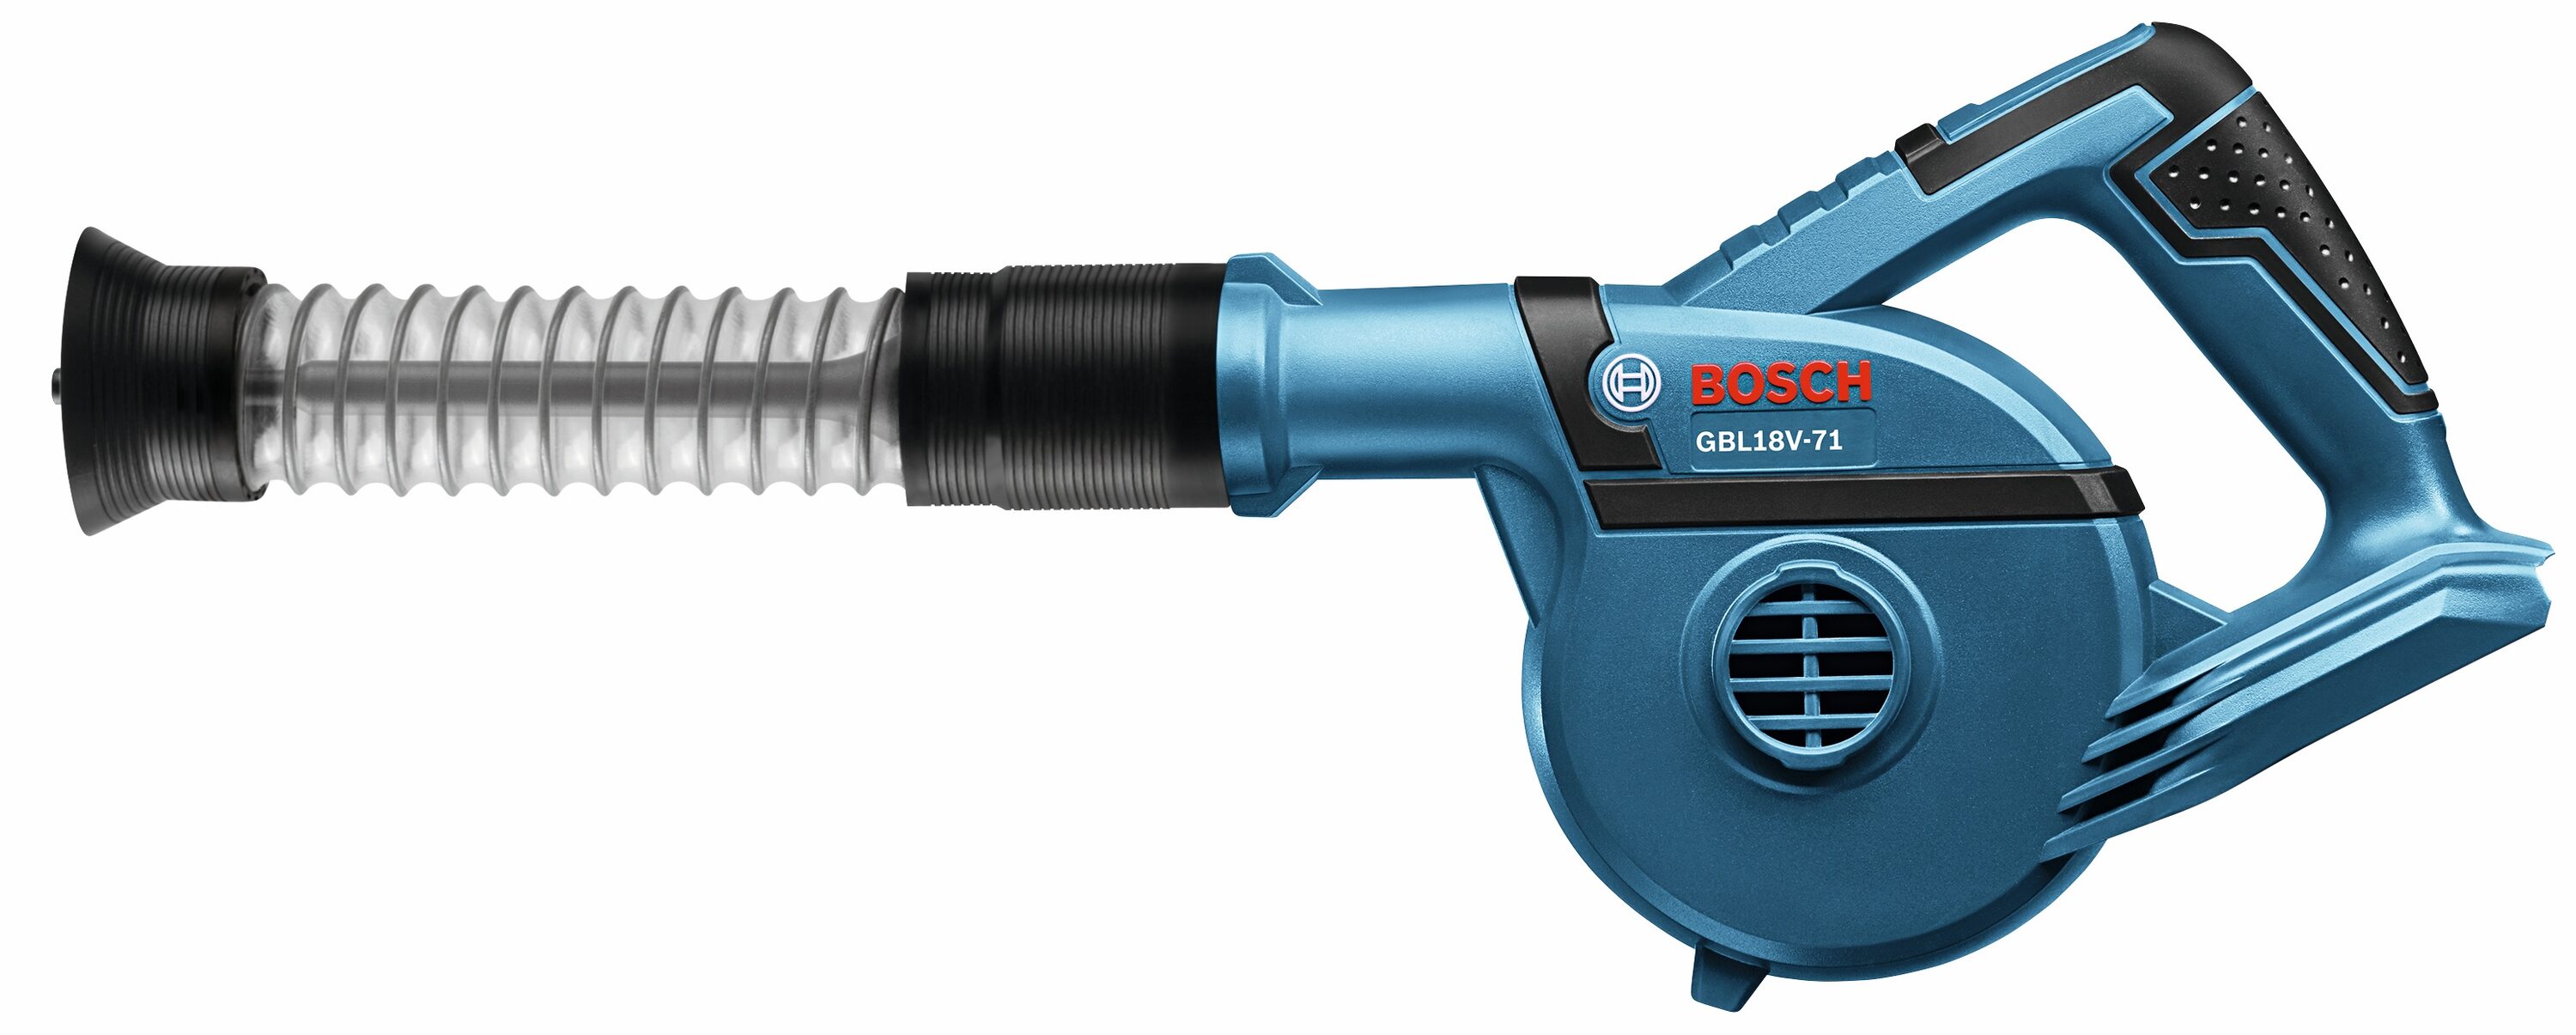 Bosch GBL 18V-120 18v Professional Cordless Blower – Bare Unit : Patio,  Lawn & Garden 